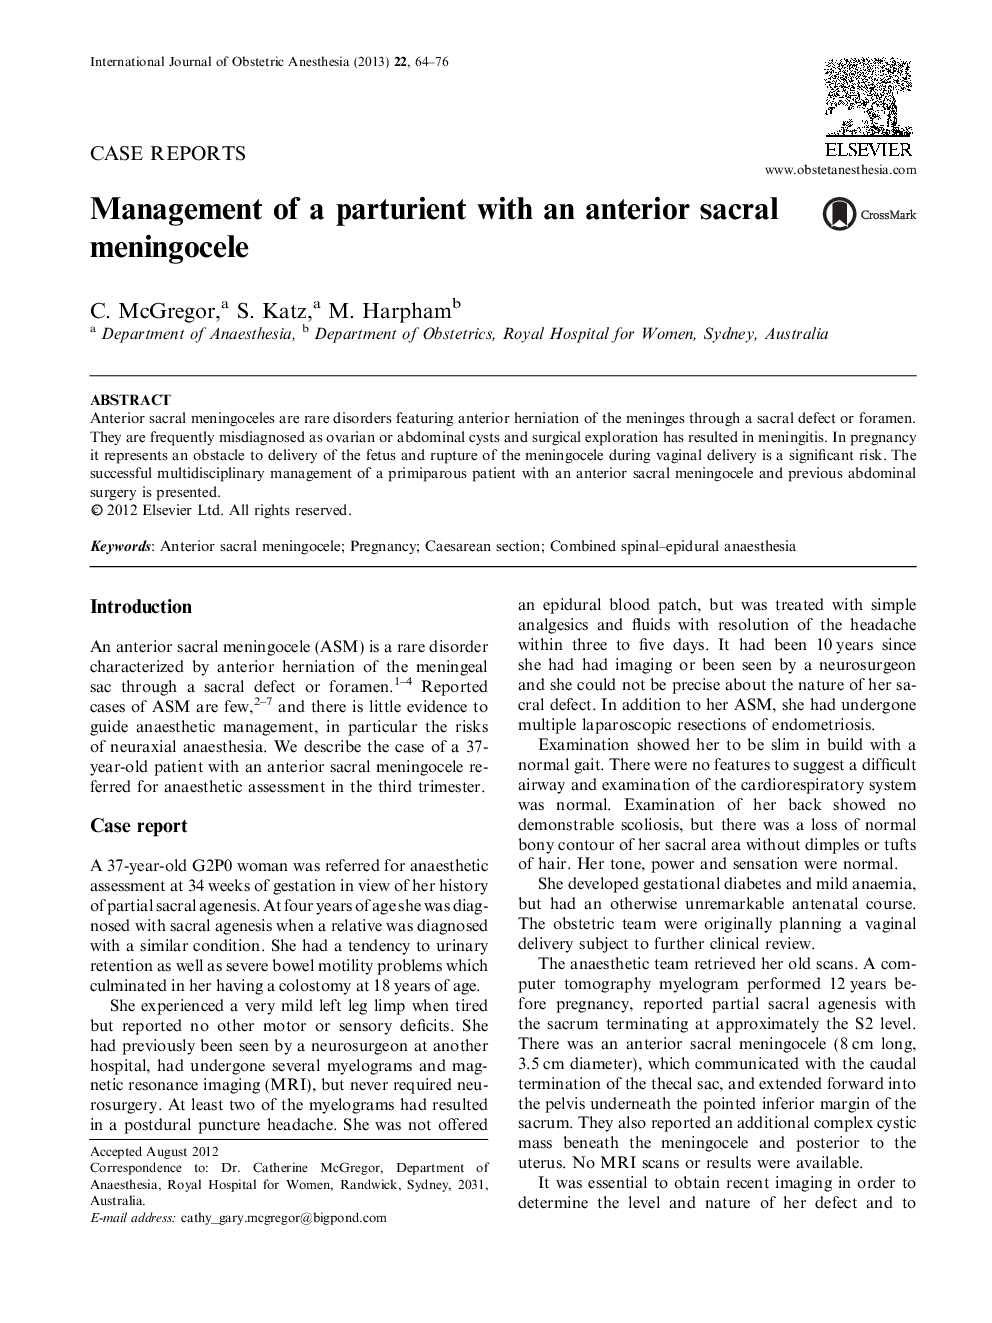 Management of a parturient with an anterior sacral meningocele